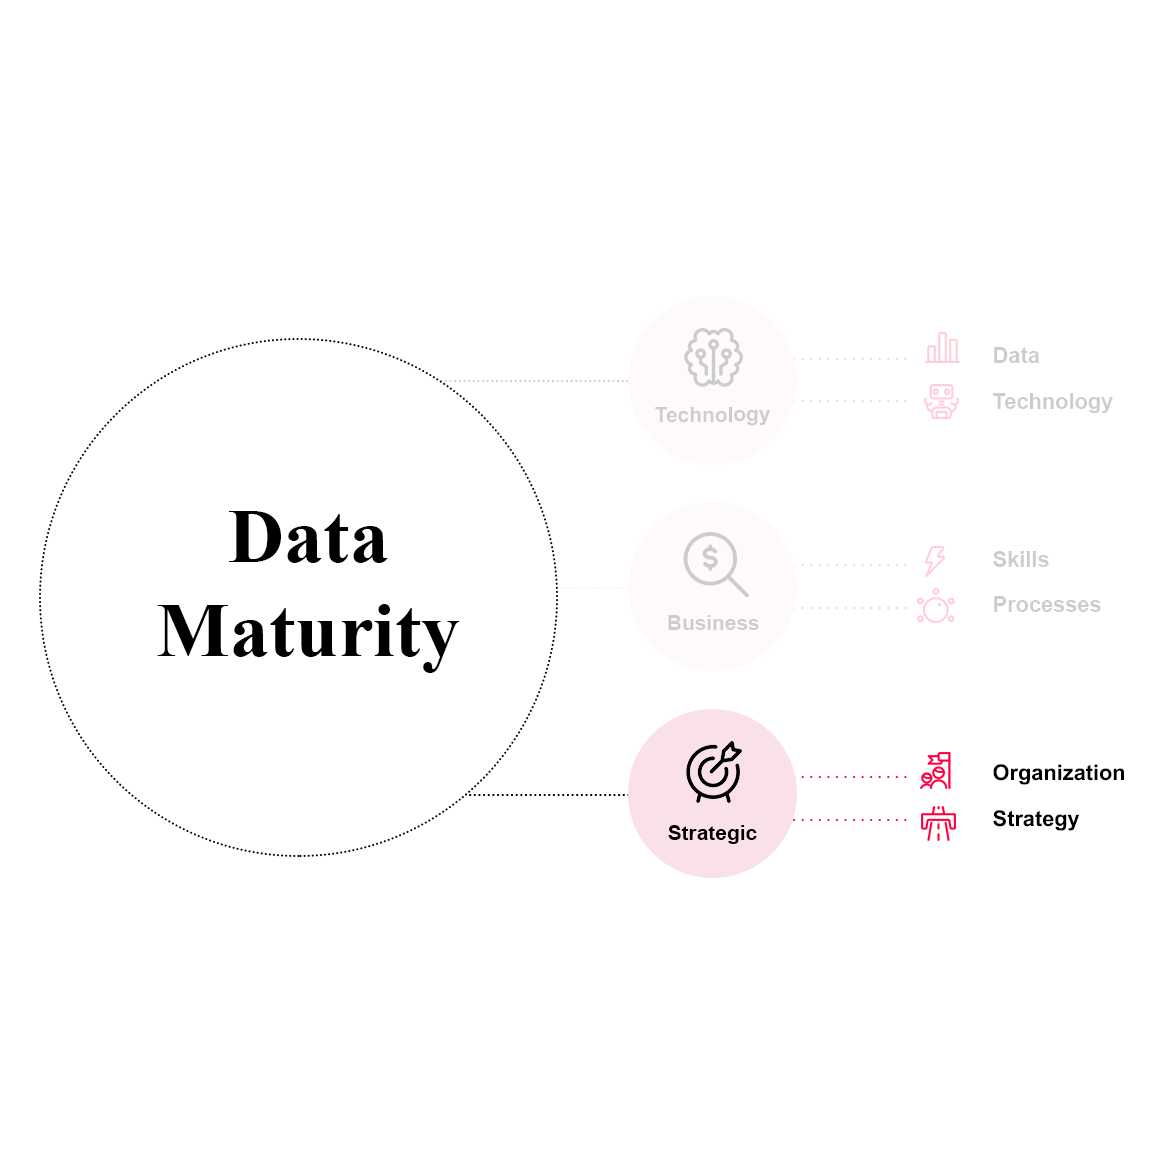 Data Maturity